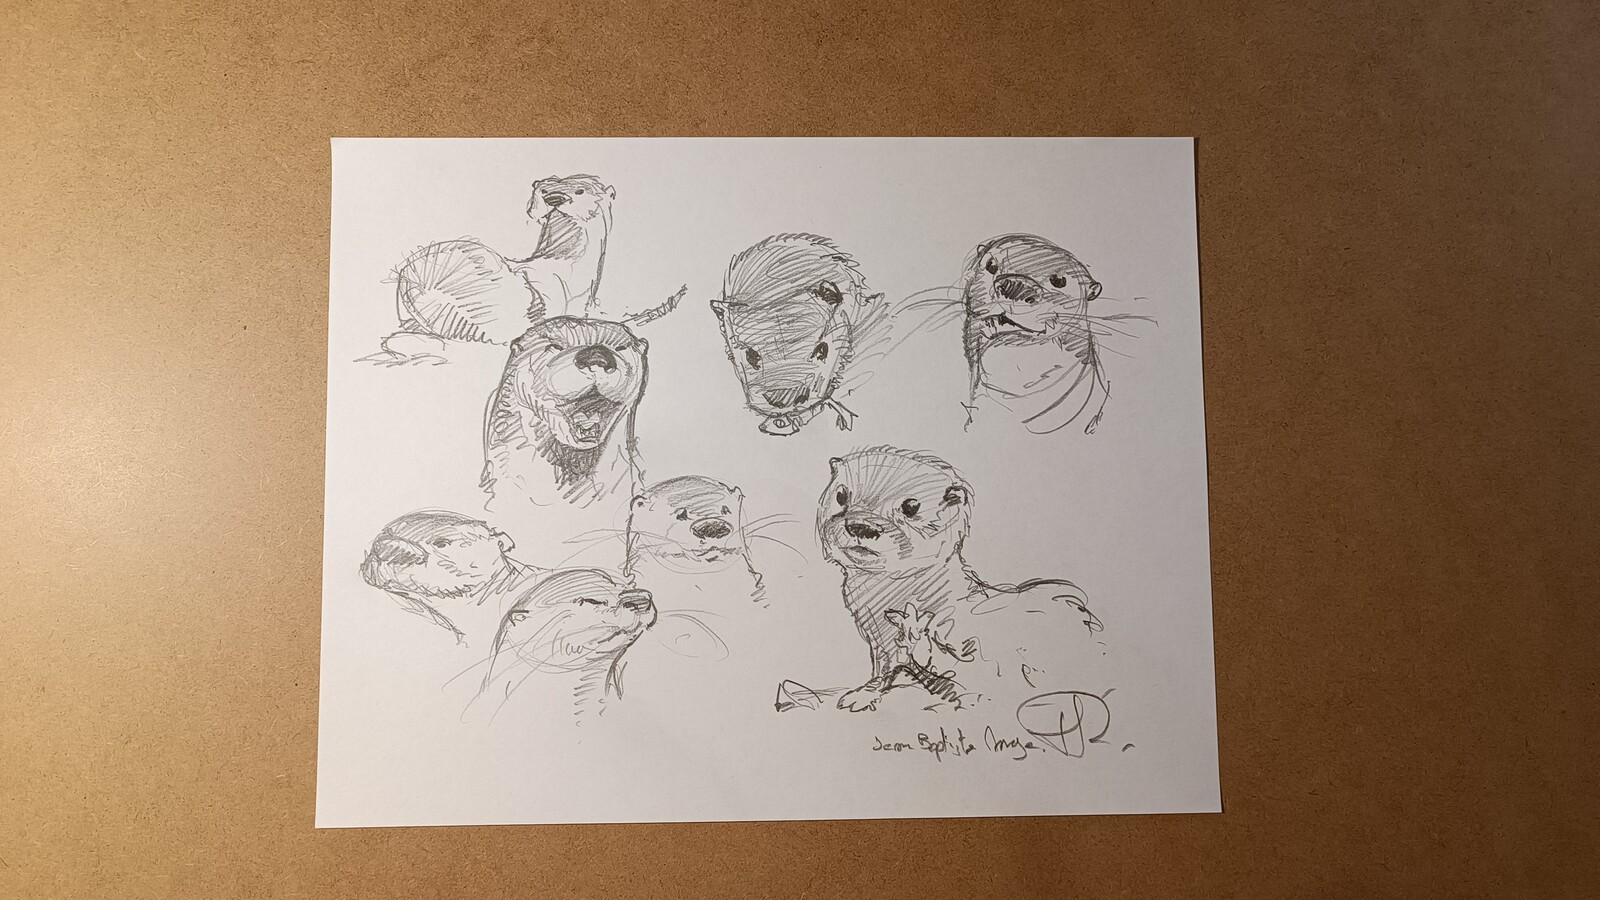 Otter
animal sketch
